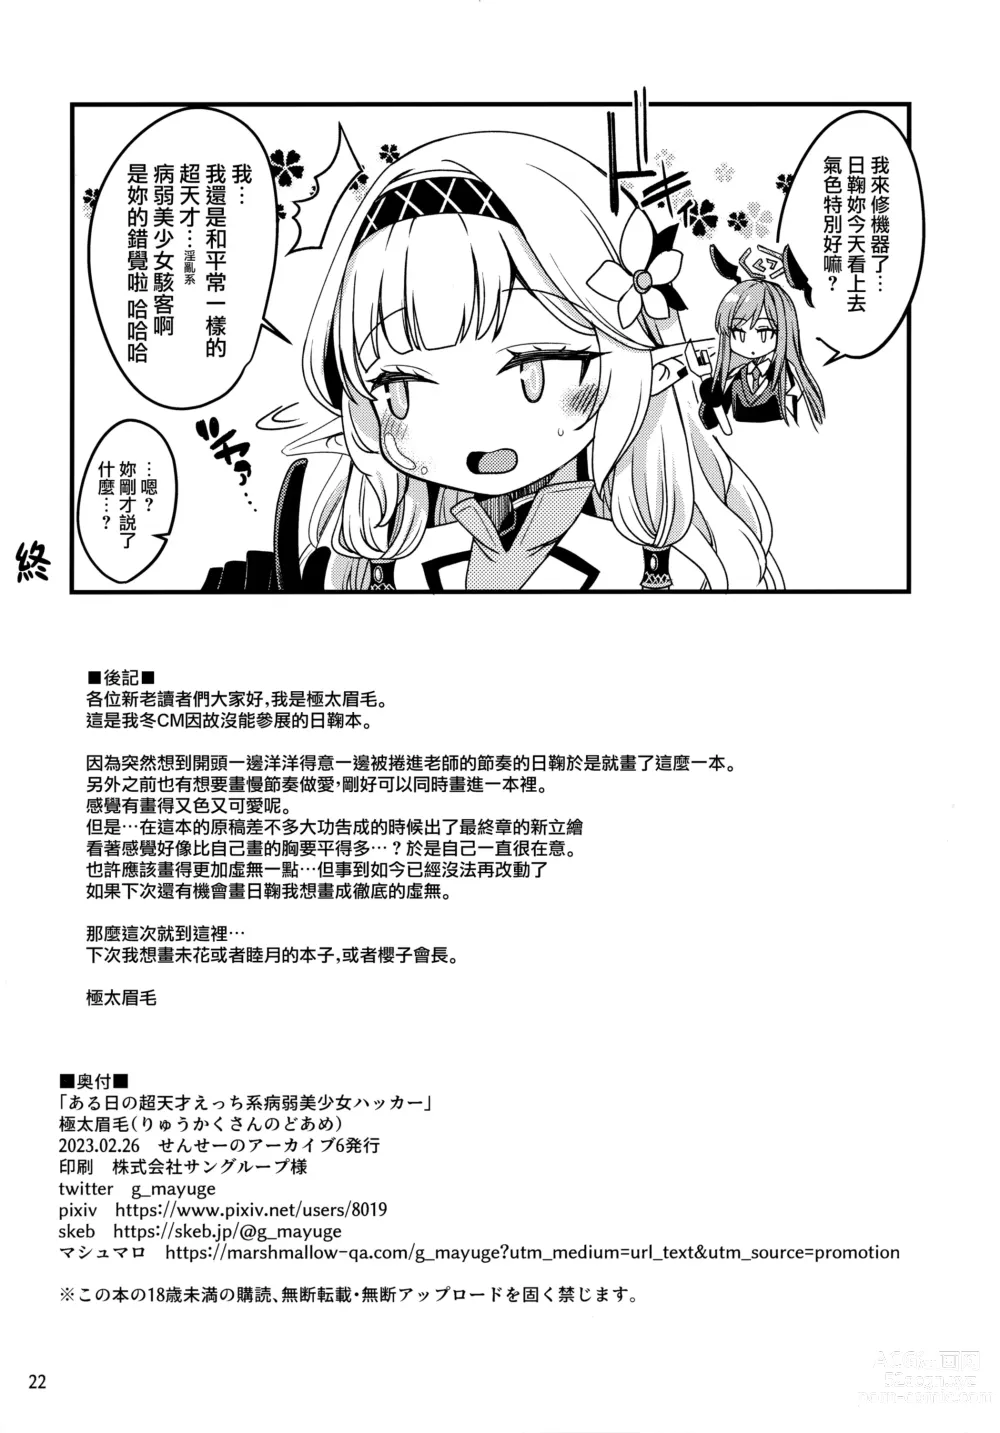 Page 22 of doujinshi Aru Hi no Chou Tensai Ecchi Kei Byoujaku Bishoujo Hacker